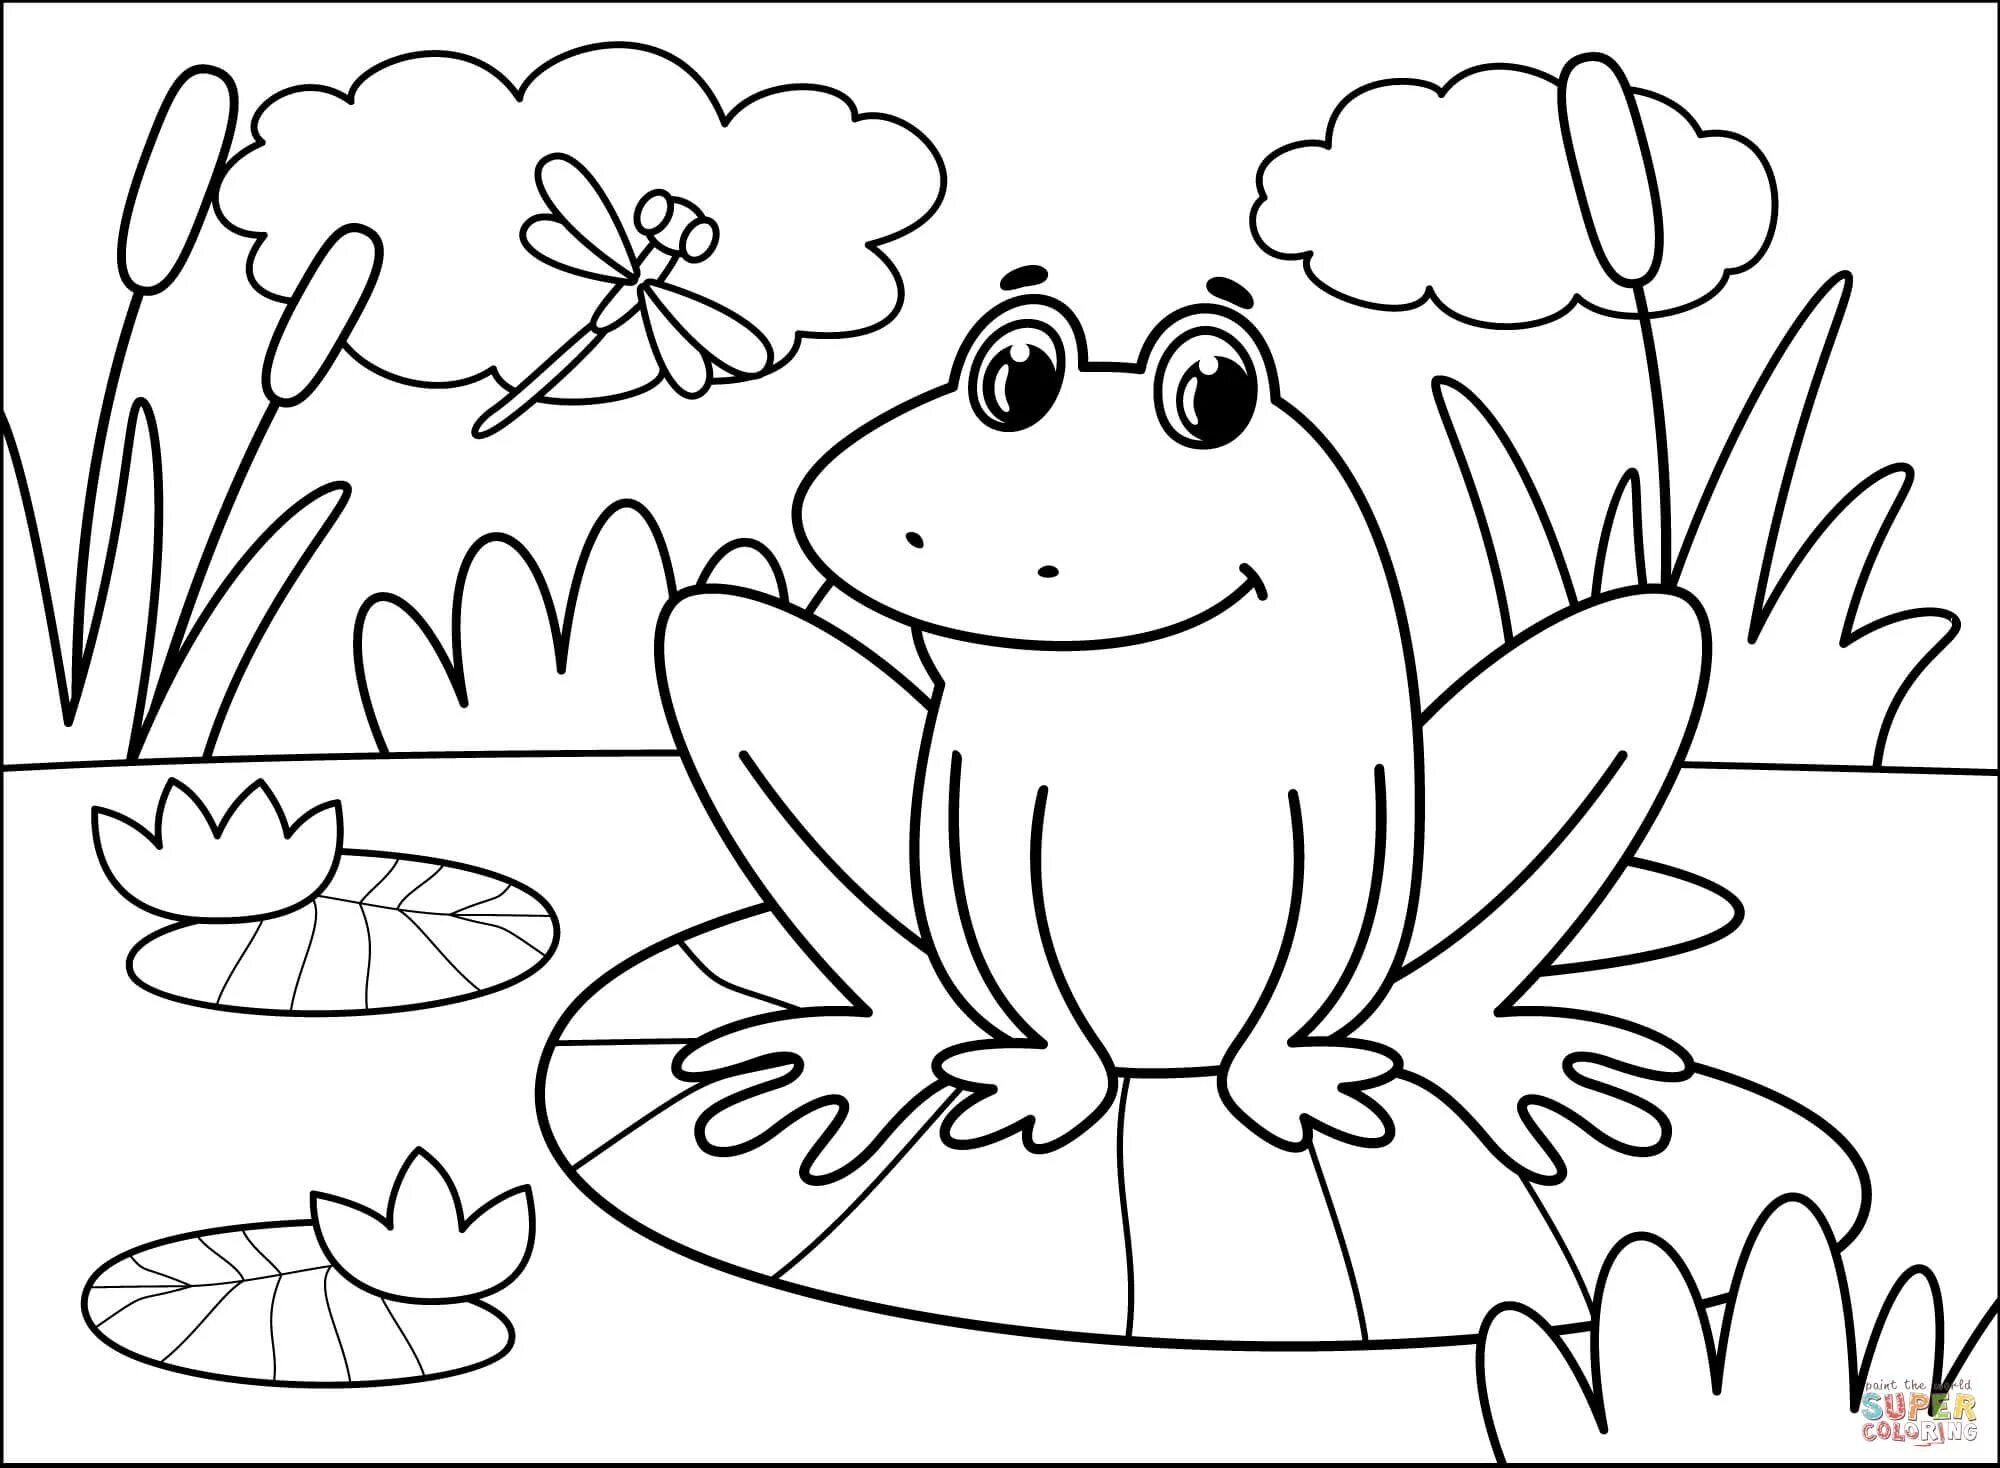 Violent frog coloring for preschoolers